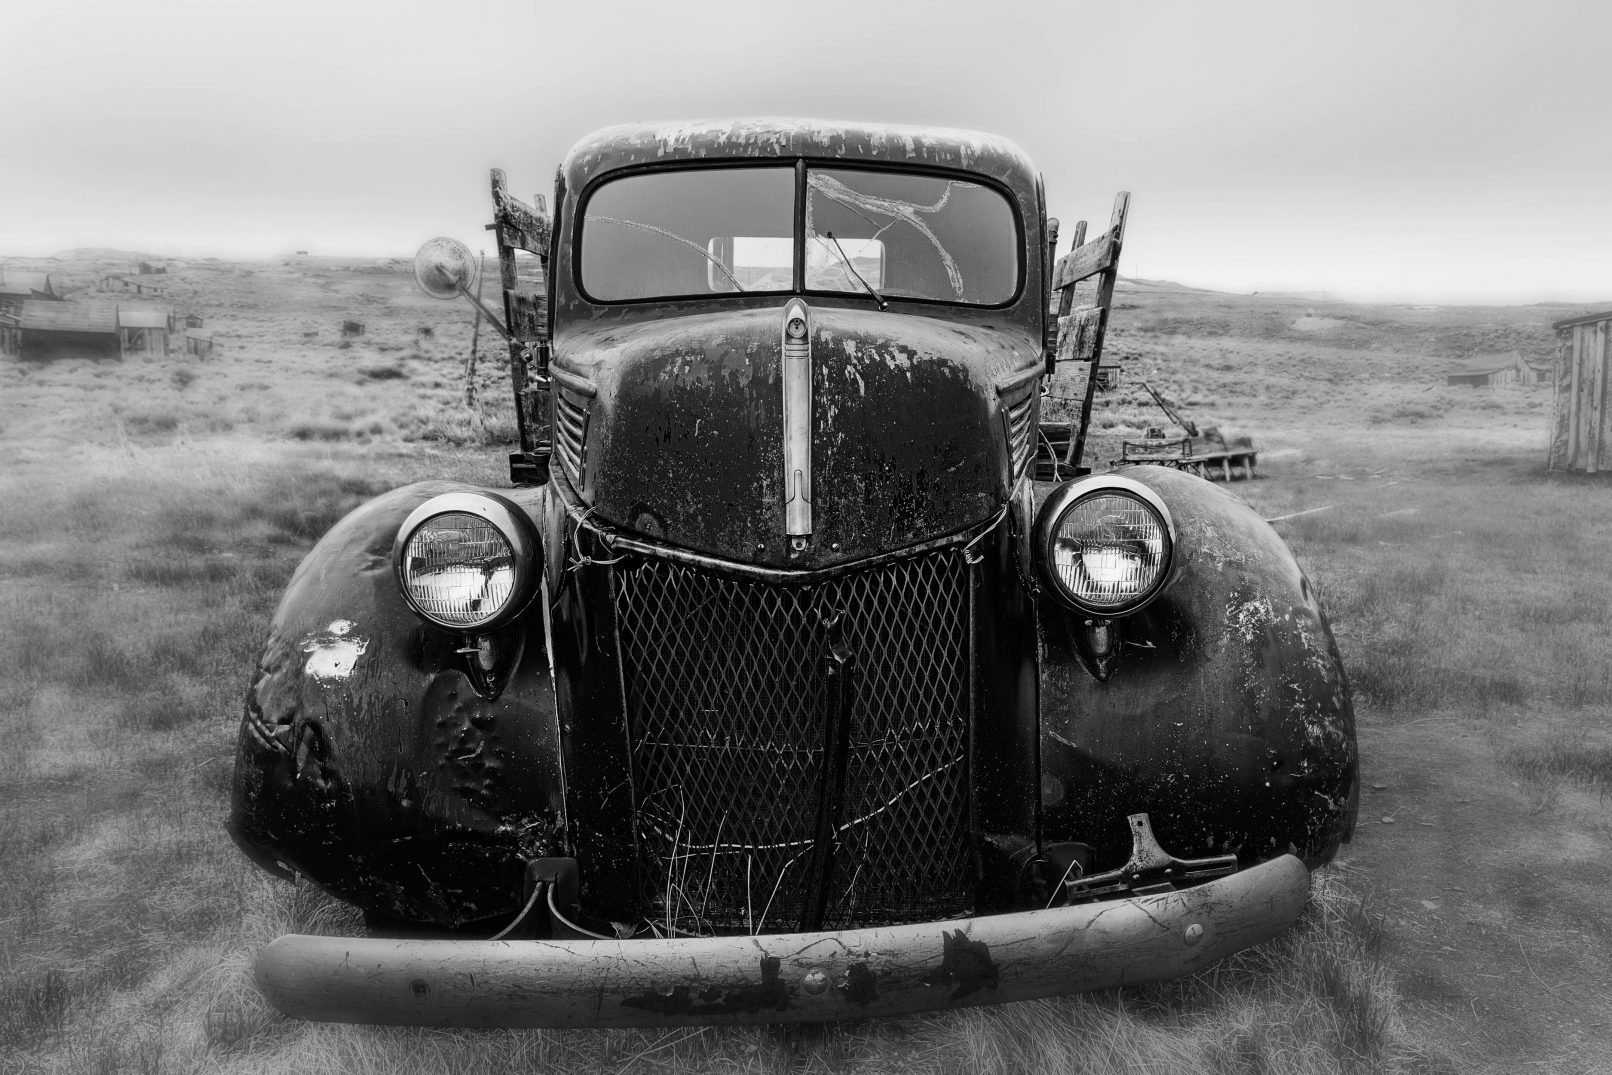 Old car in Bodi, California ghost town